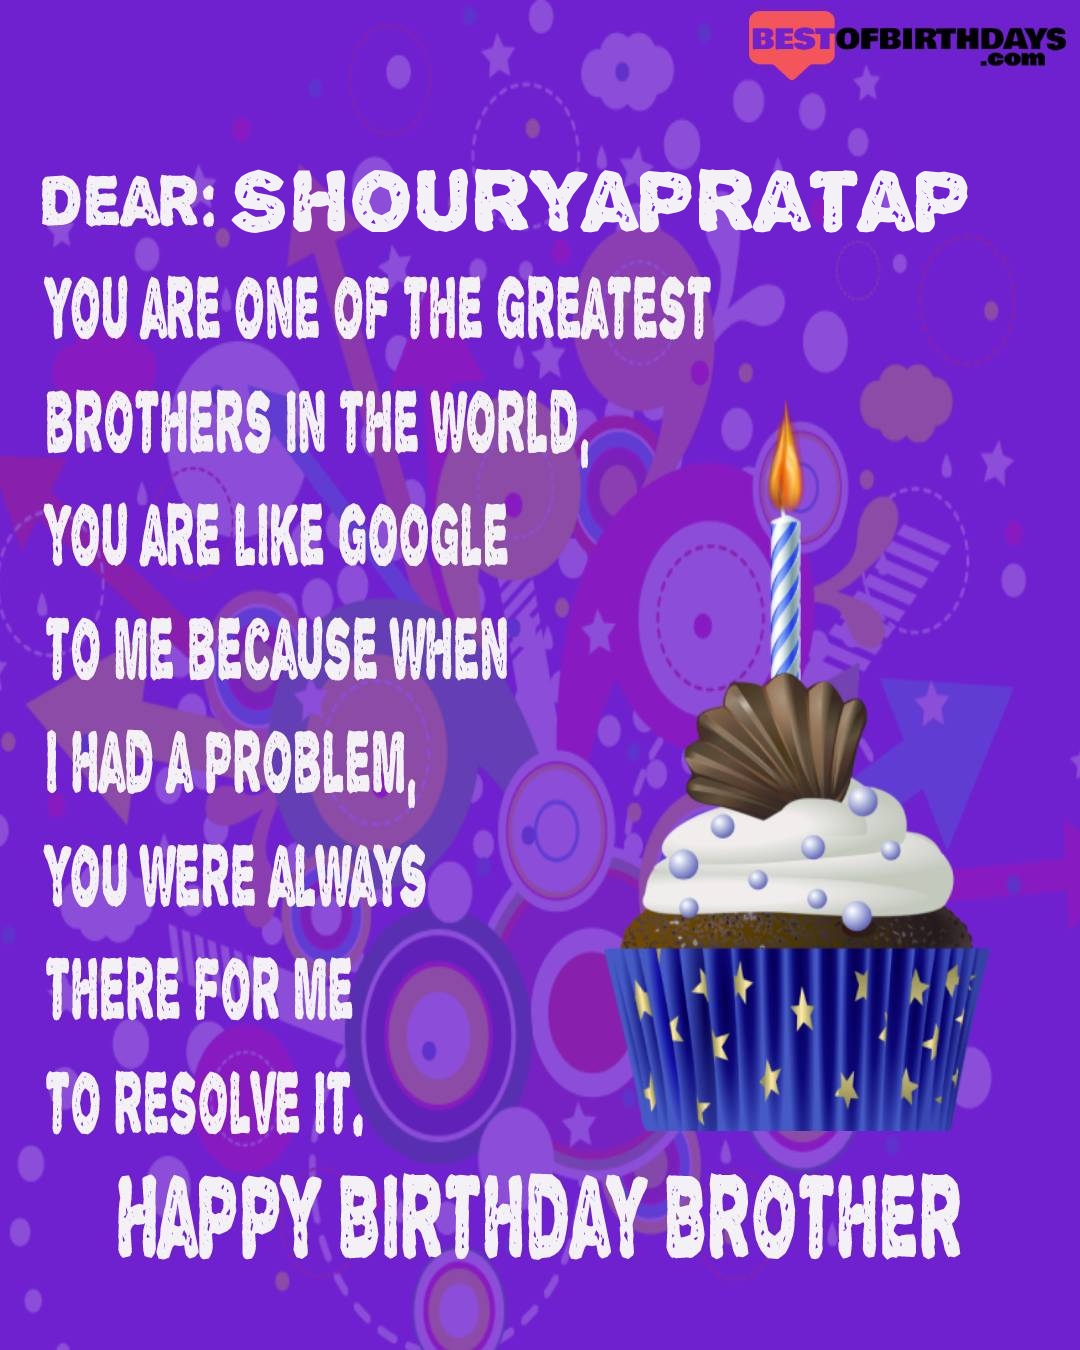 Happy birthday shouryapratap bhai brother bro